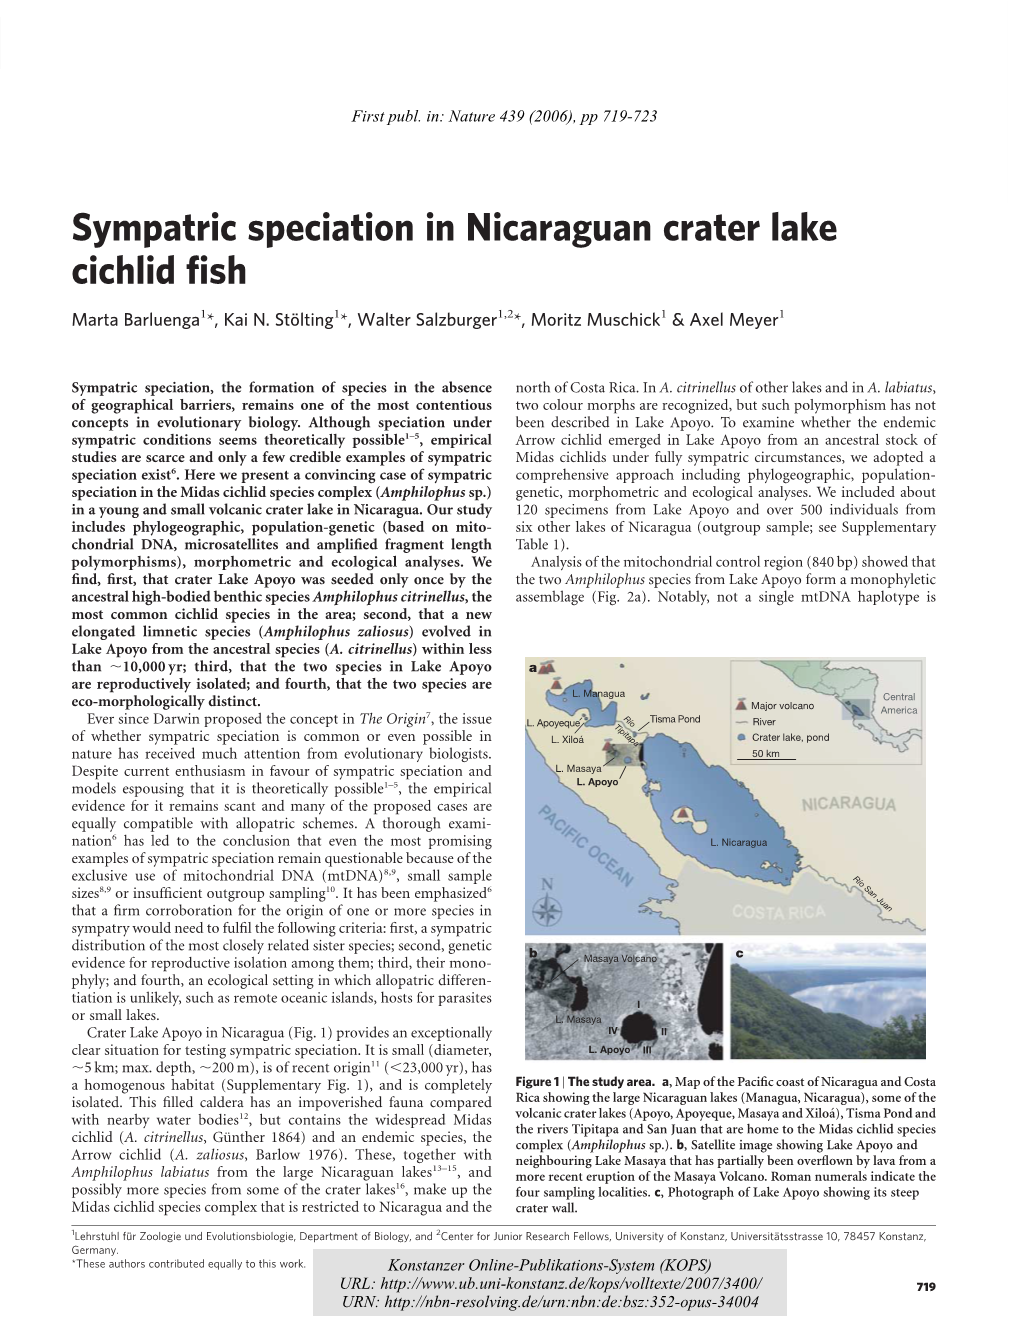 Sympatric Speciation in Nicaraguan Crater Lake Cichlid Fish